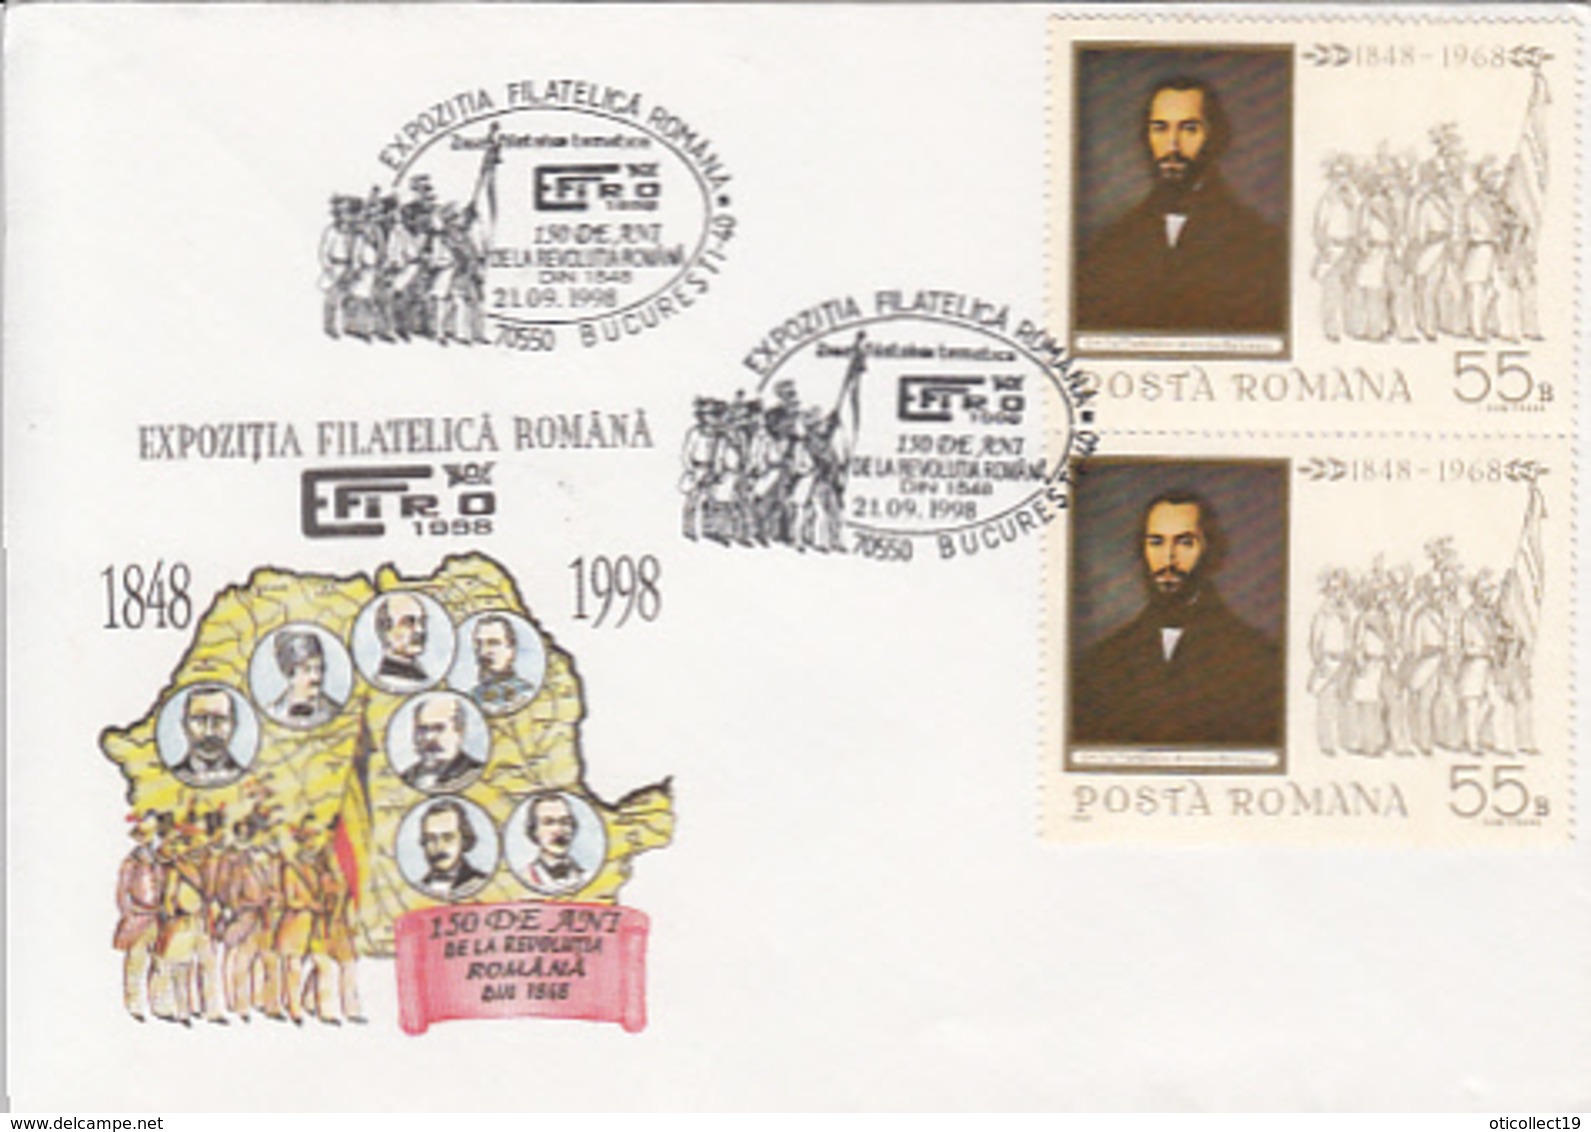 ROMANIAN 1848 REVOLUTION ANNIVERSARY, EFIRO PHILATELIC EXHIBITION, SPECIAL COVER, OVERPRINT STAMP, 1998, ROMANIA - Brieven En Documenten